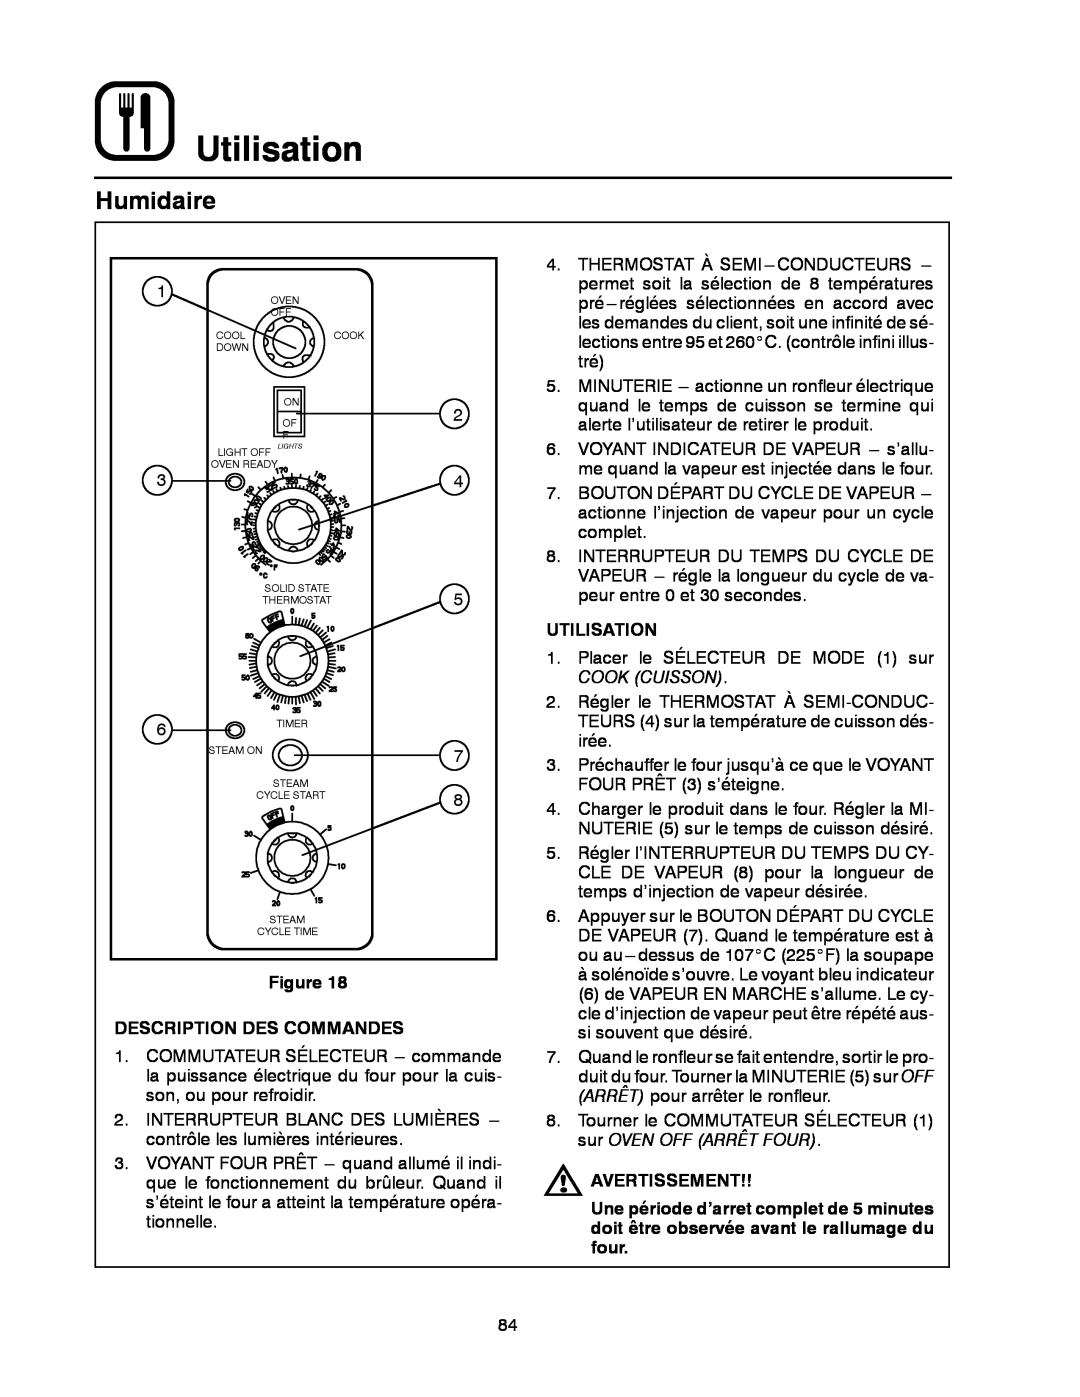 Blodgett DFG-200, DFG-100 manual Utilisation, Humidaire, Description Des Commandes, Avertissement 